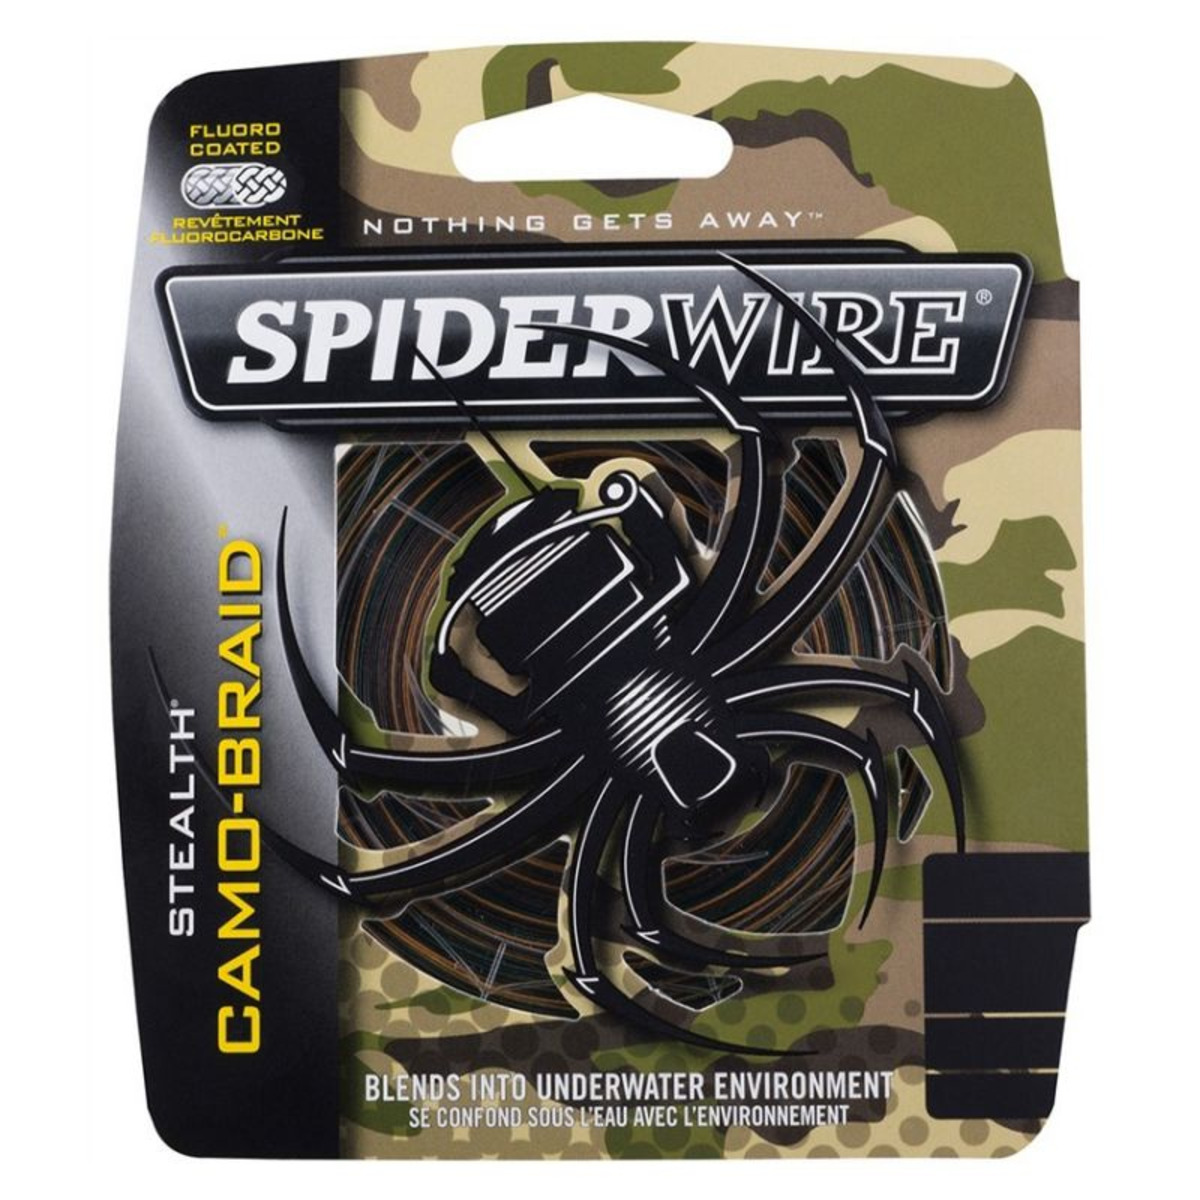 Spiderwire New Stealth Camo - 0.17 mm - 1800 m - 2000yd